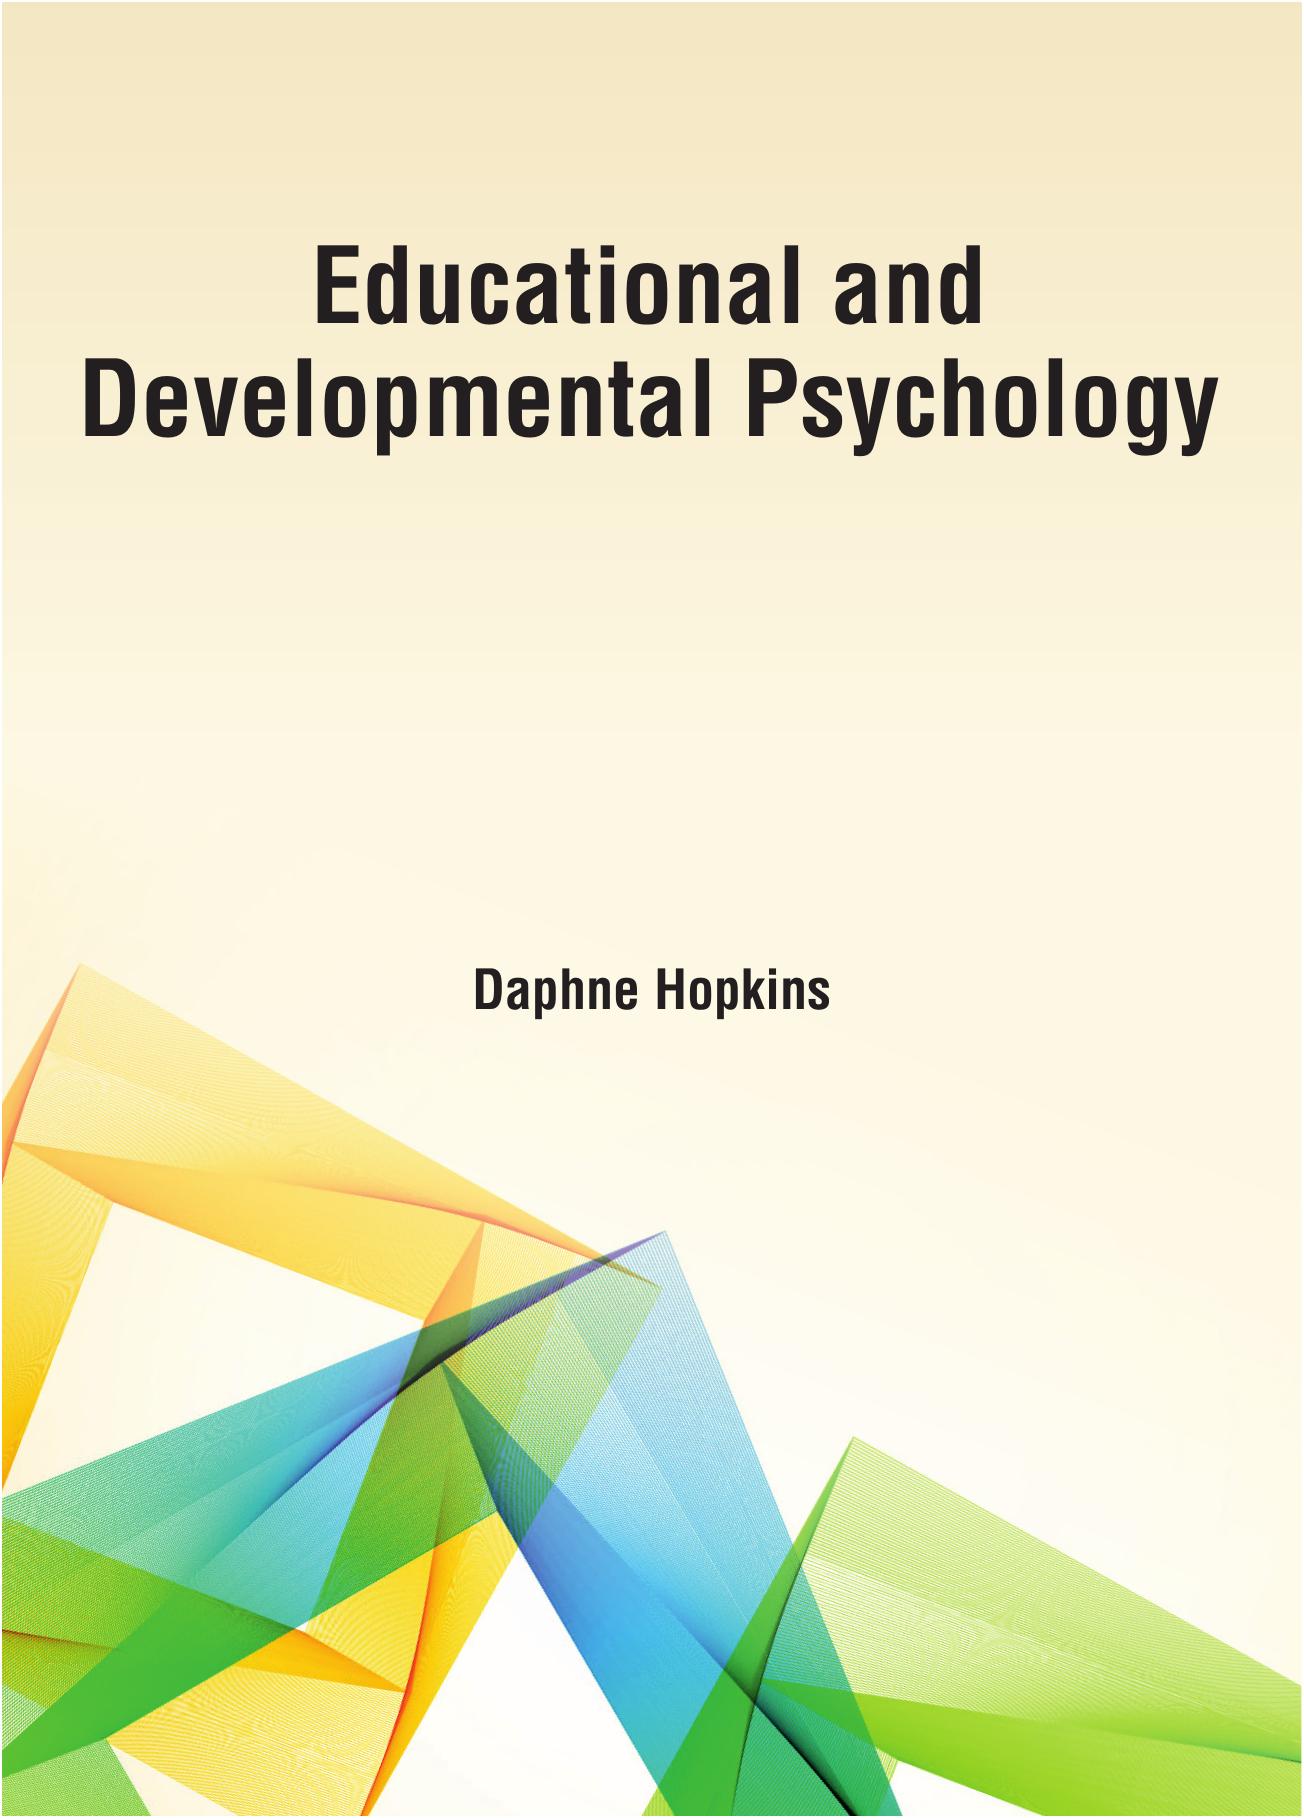 Educational and Developmental Psychology 2016